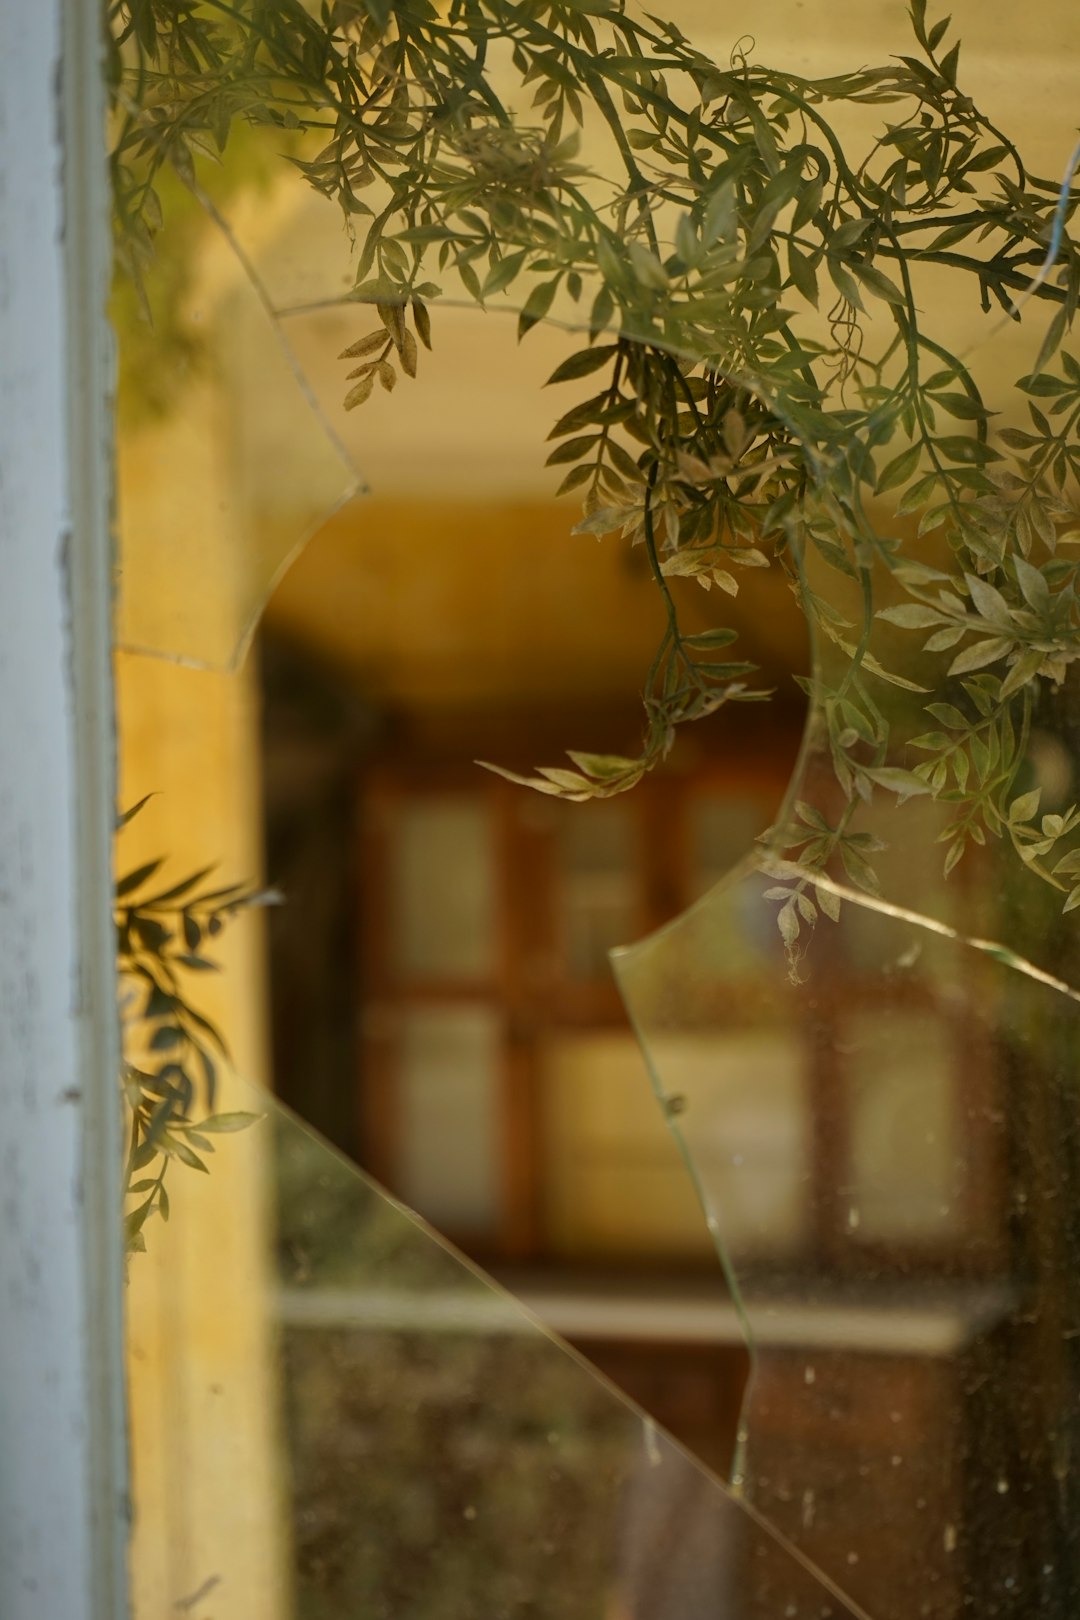 green plant near glass window